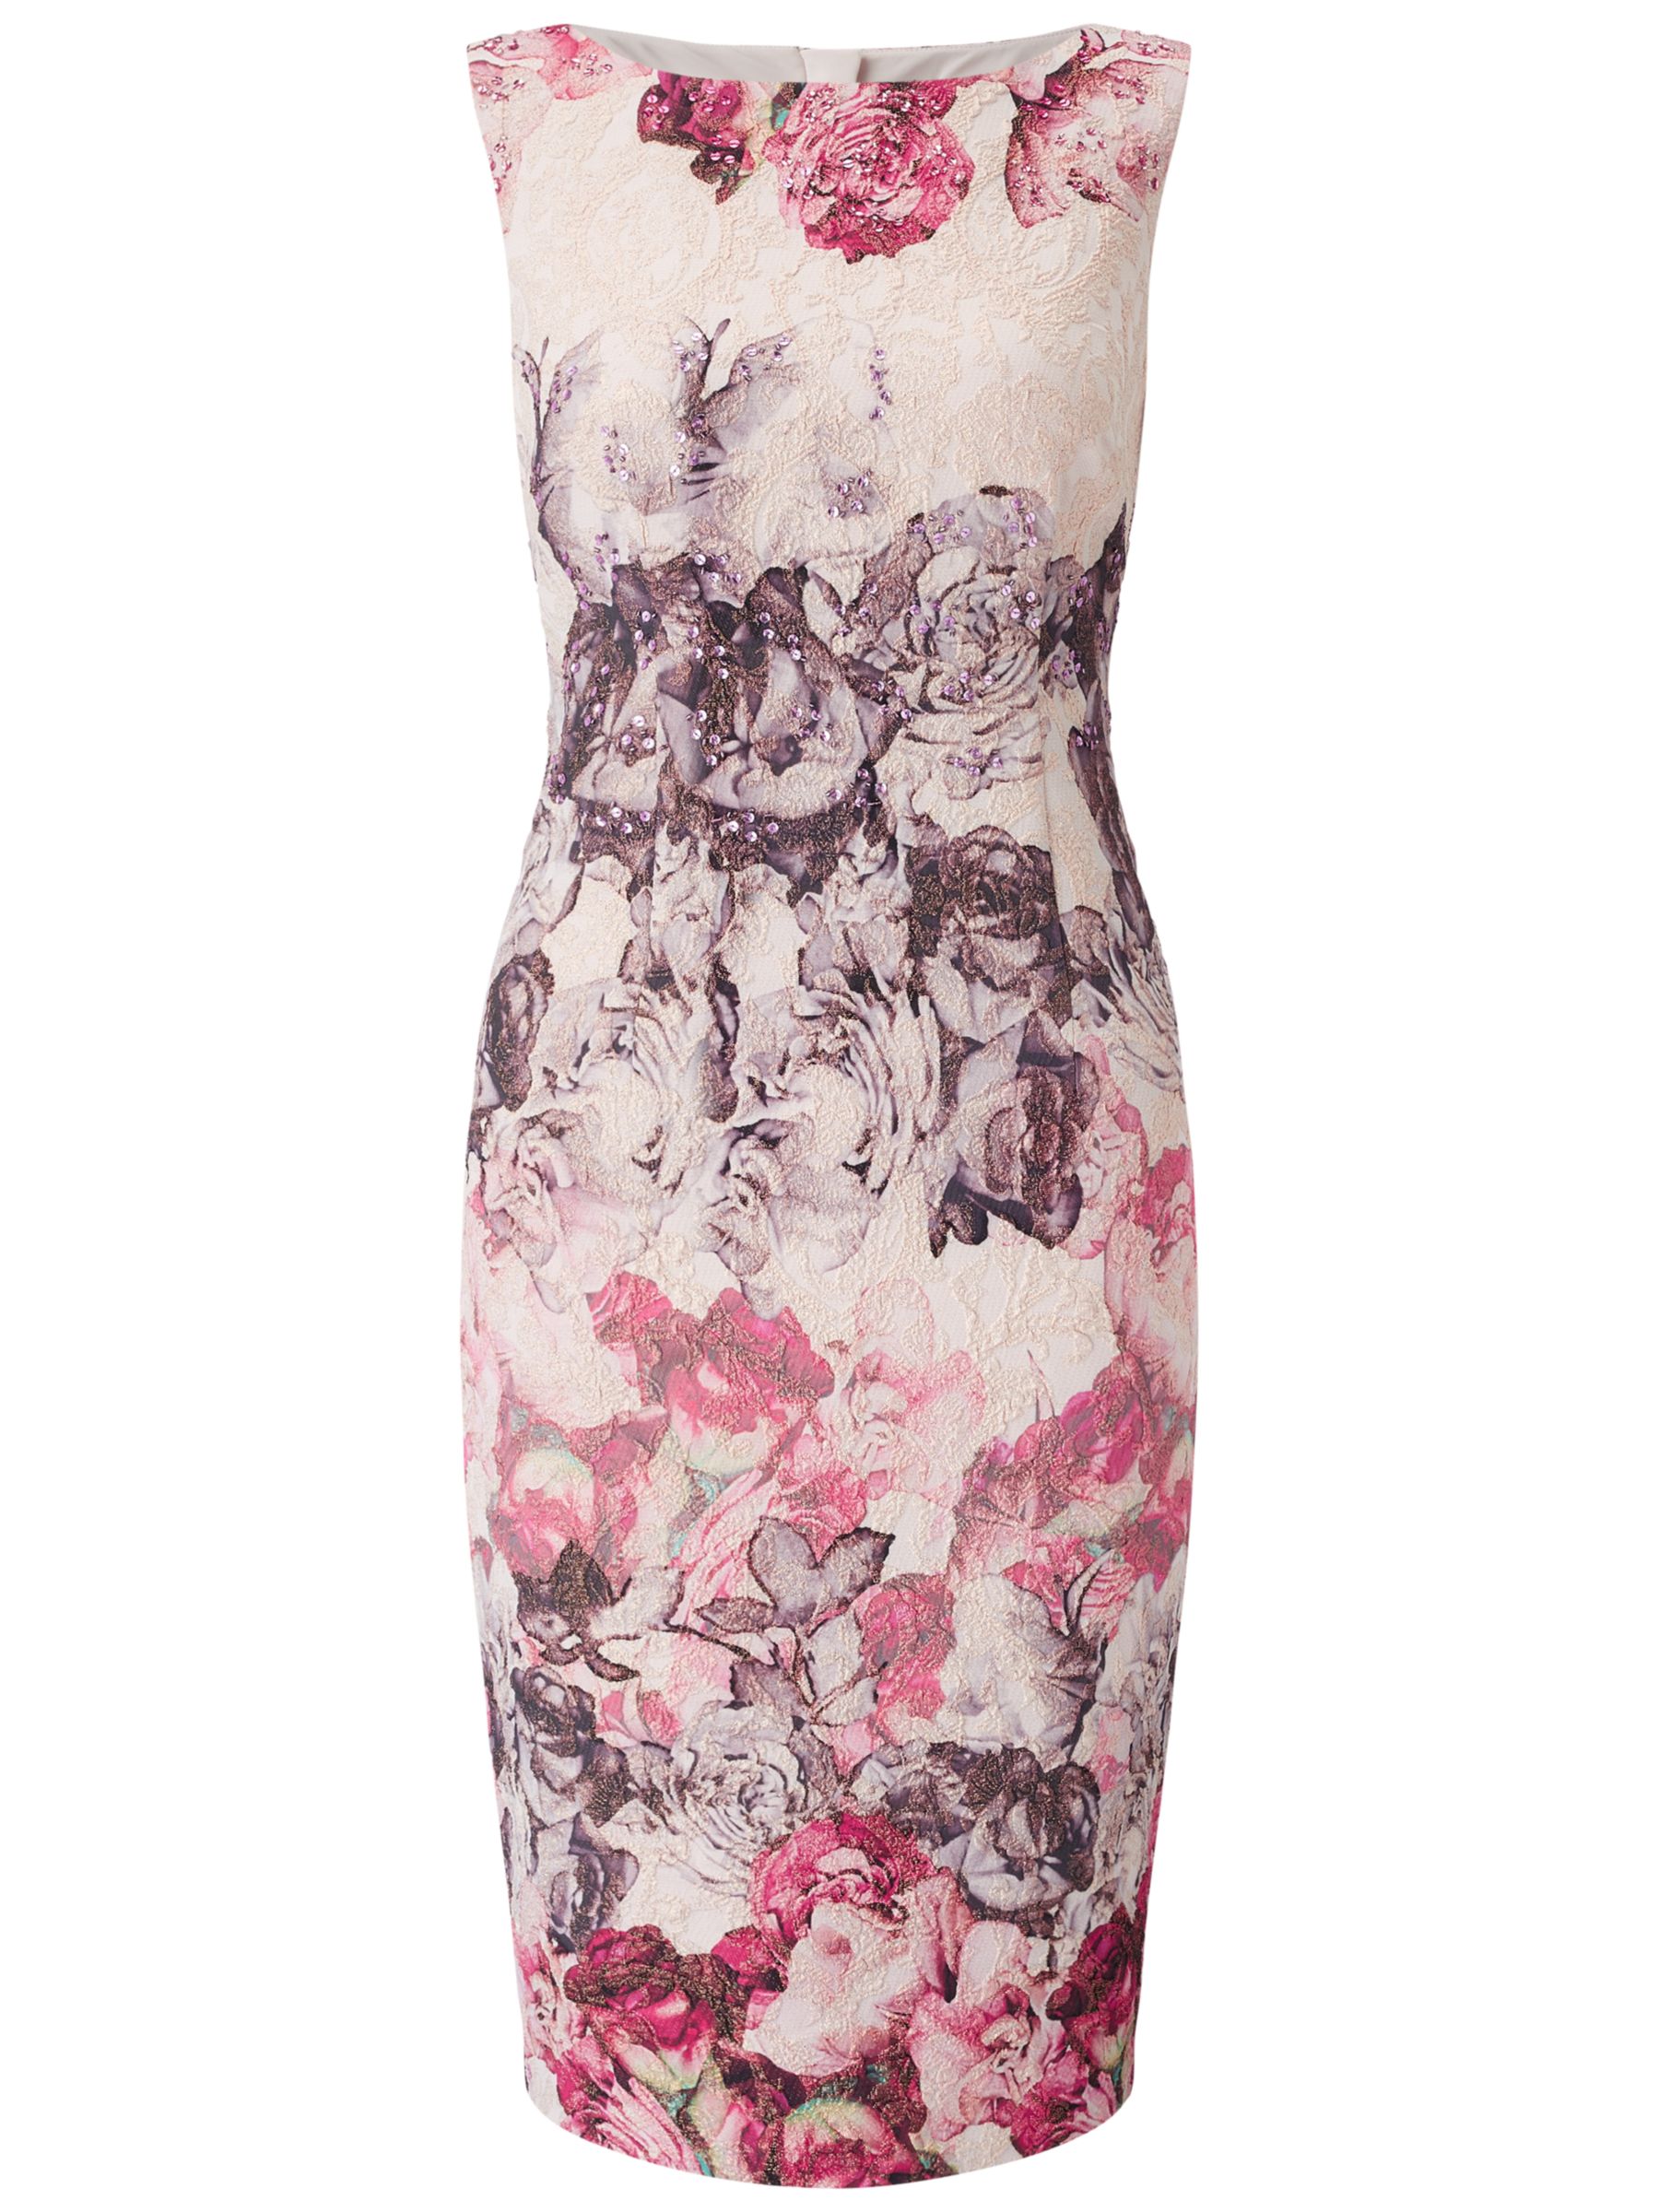 Adrianna Papell Rose Print Sleeveless Sheath Dress, Shell/Multi